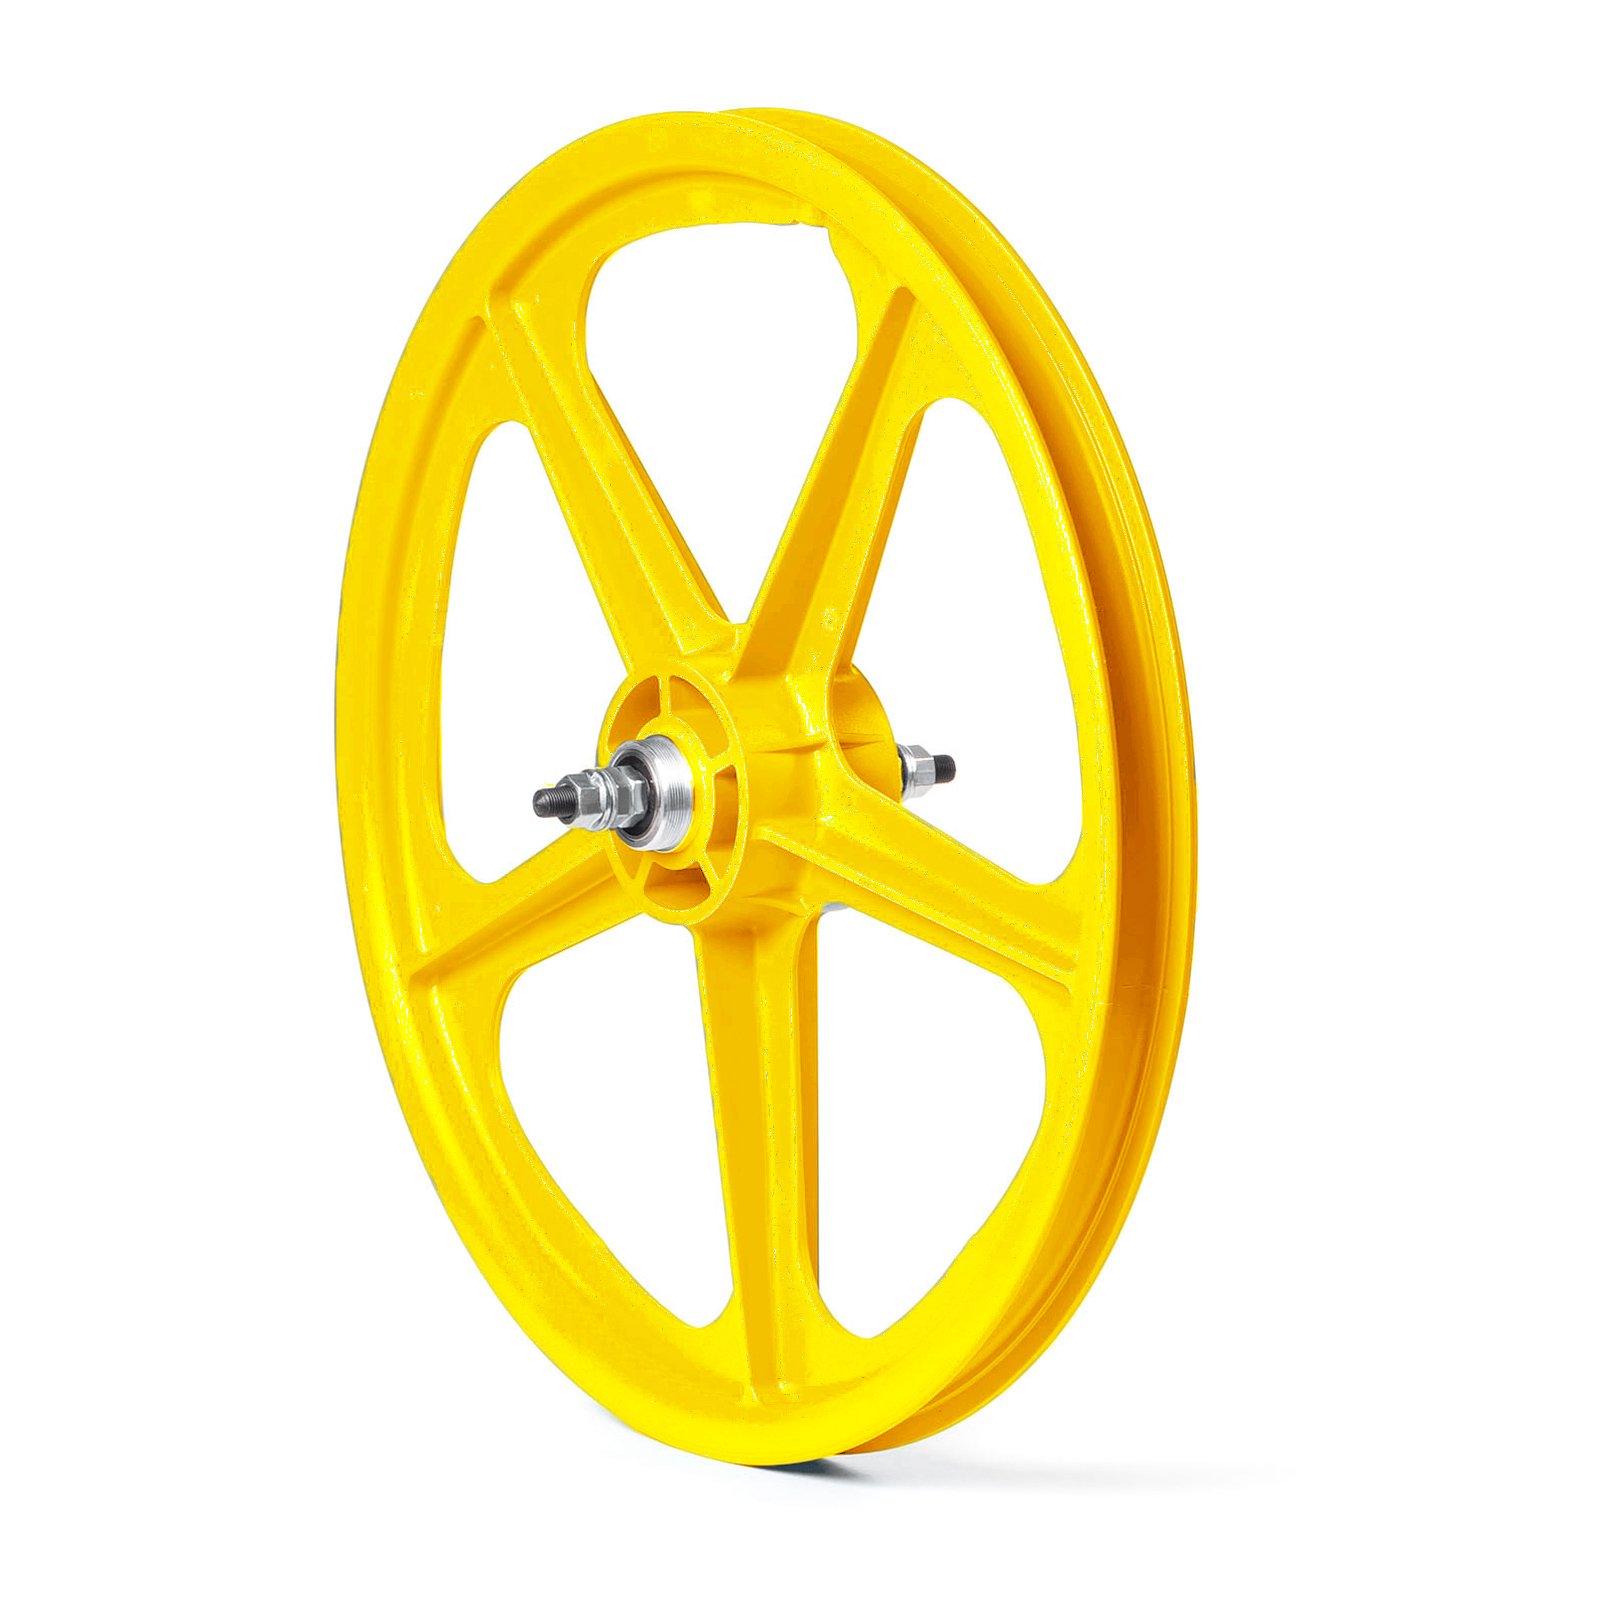 【20%OFF】SKYWAY - 20'' Tuff Wheel 2 - F&R Set Color ( 3/8